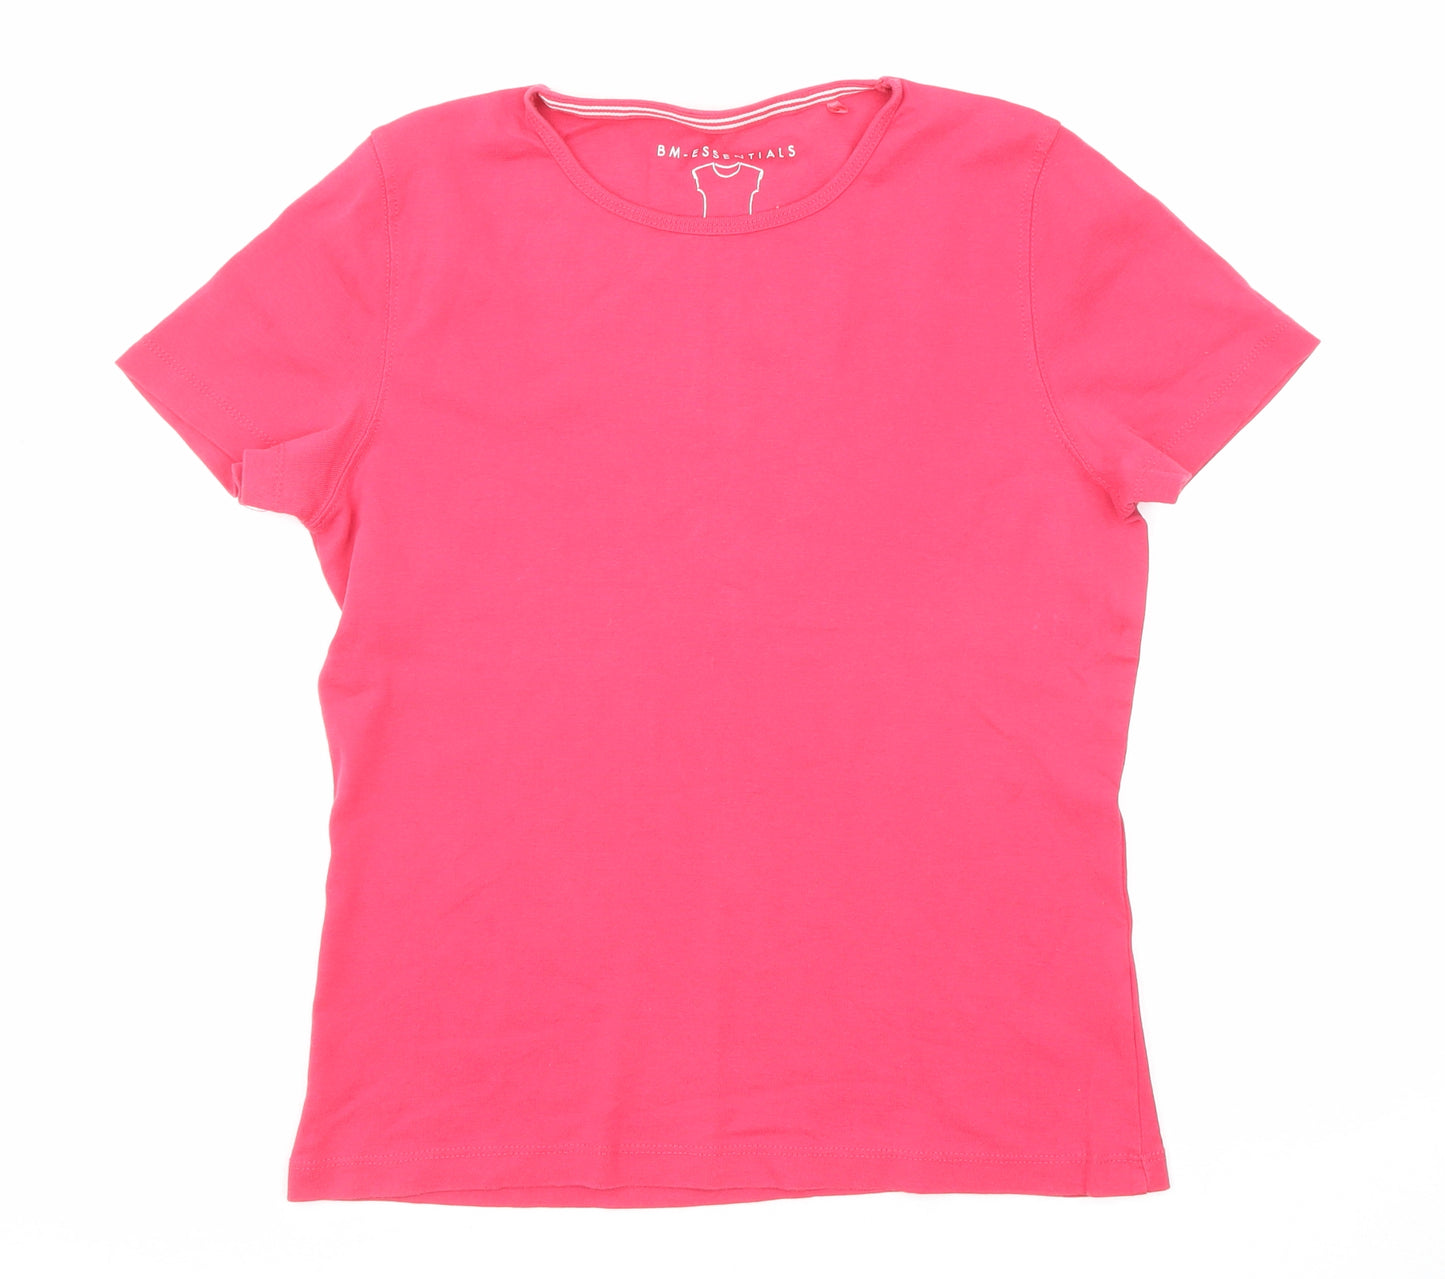 Bonmarché Womens Pink Cotton Basic T-Shirt Size S Round Neck